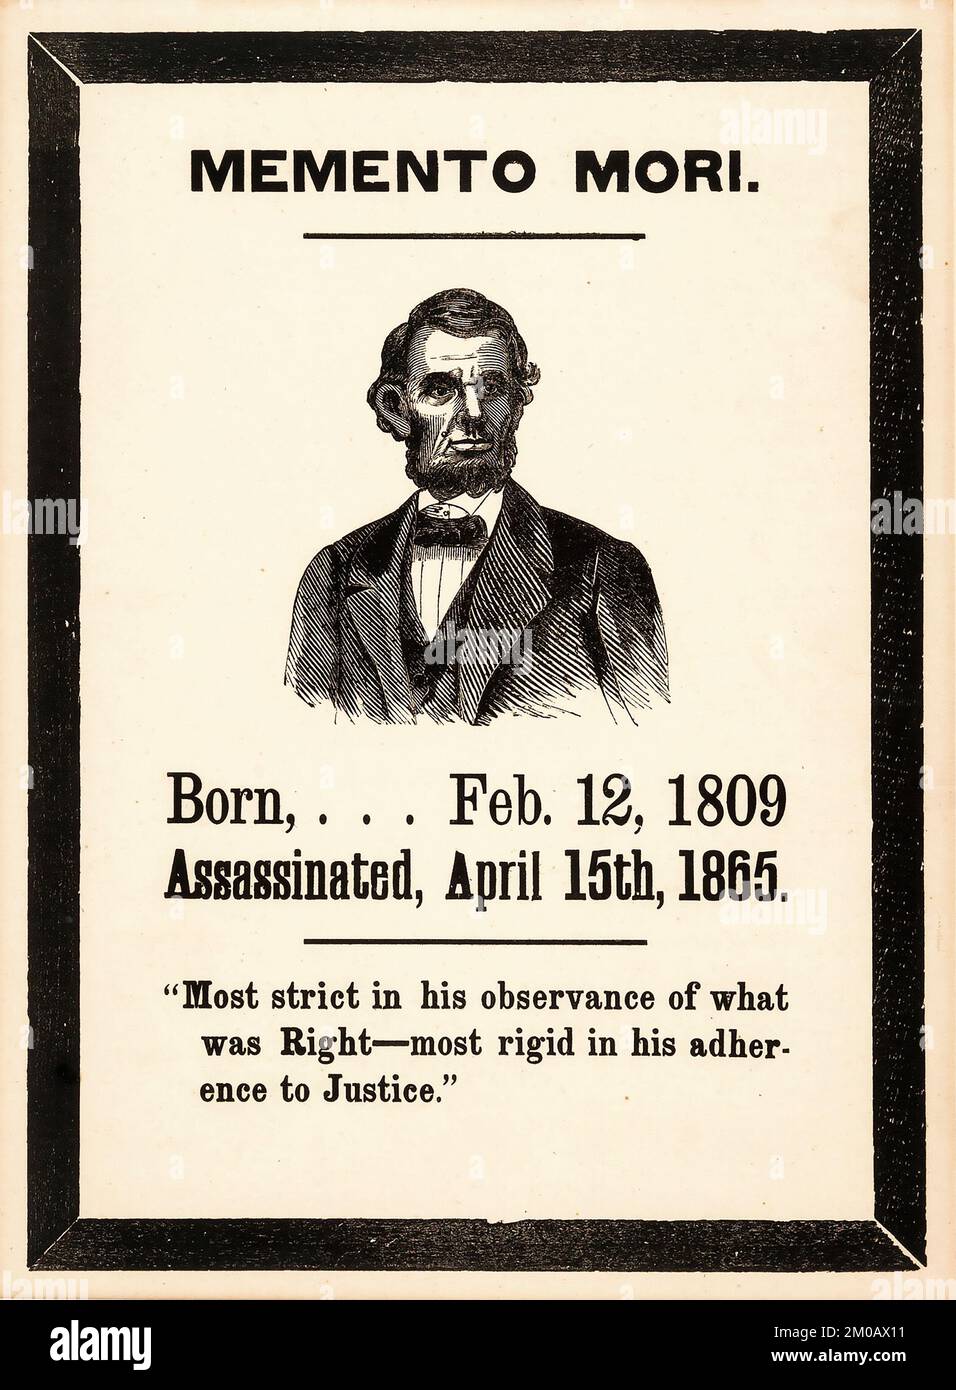 President Abraham Lincoln Born 1809, assassinated 1865 - Mourning Poster. Titled "Memento Mori" Stock Photo